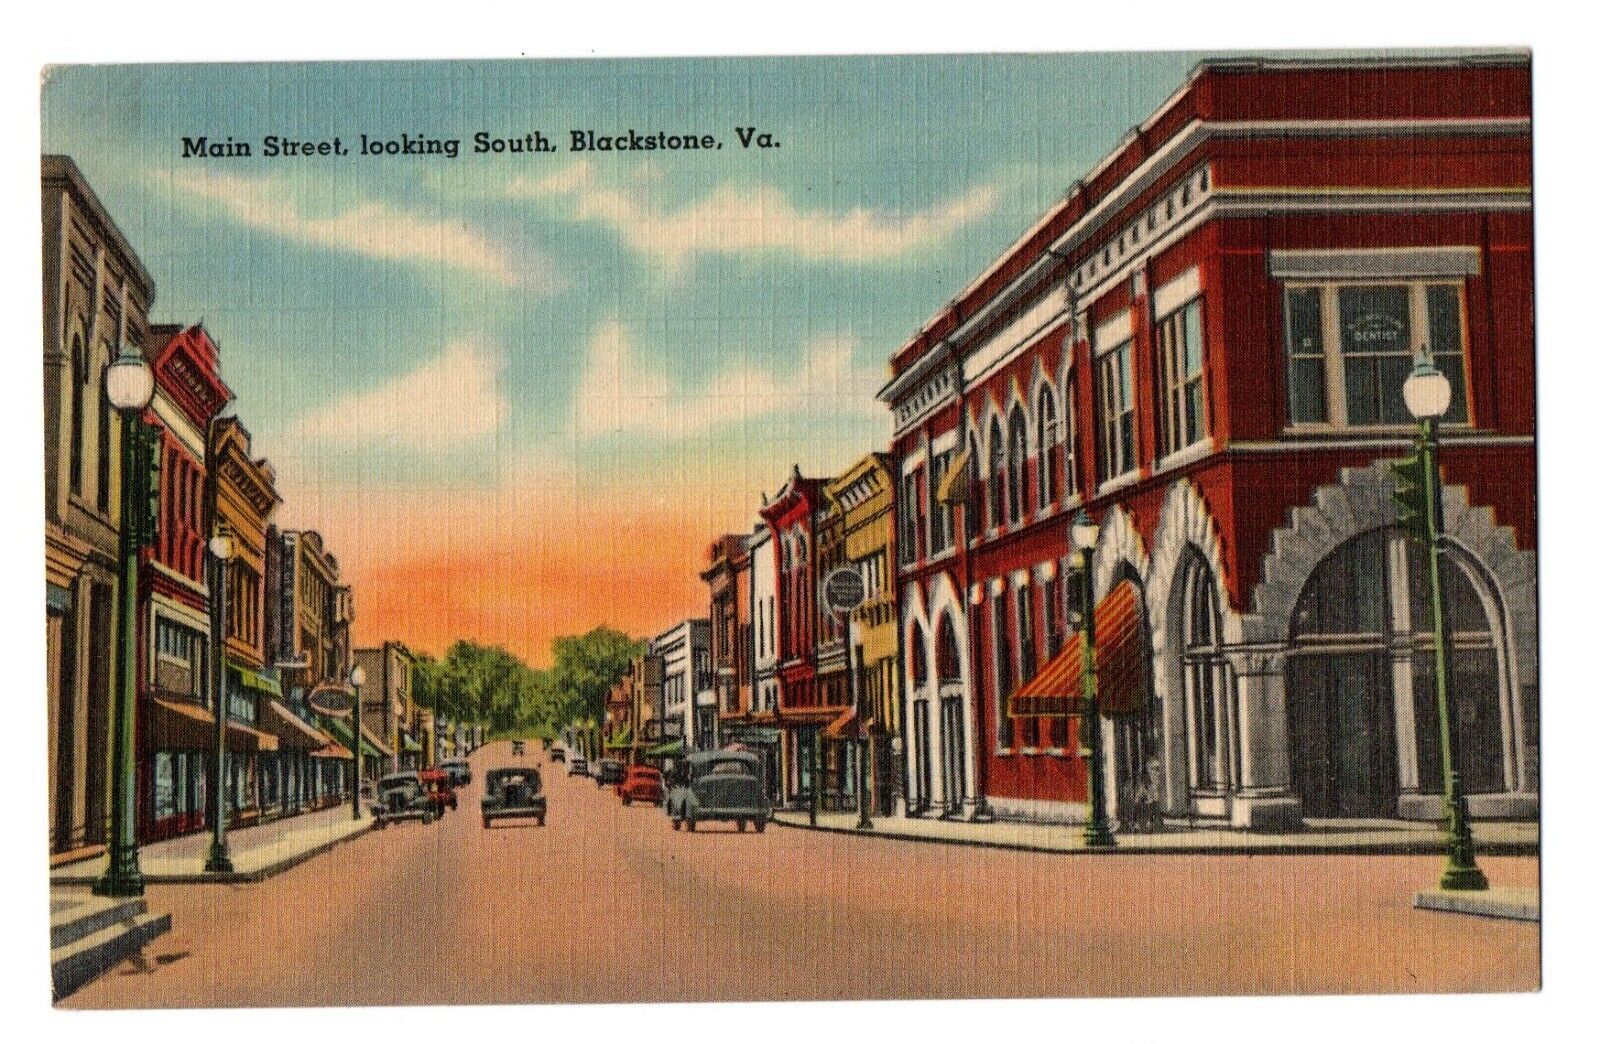 Blackstone VA Main Street looking South c 1930s